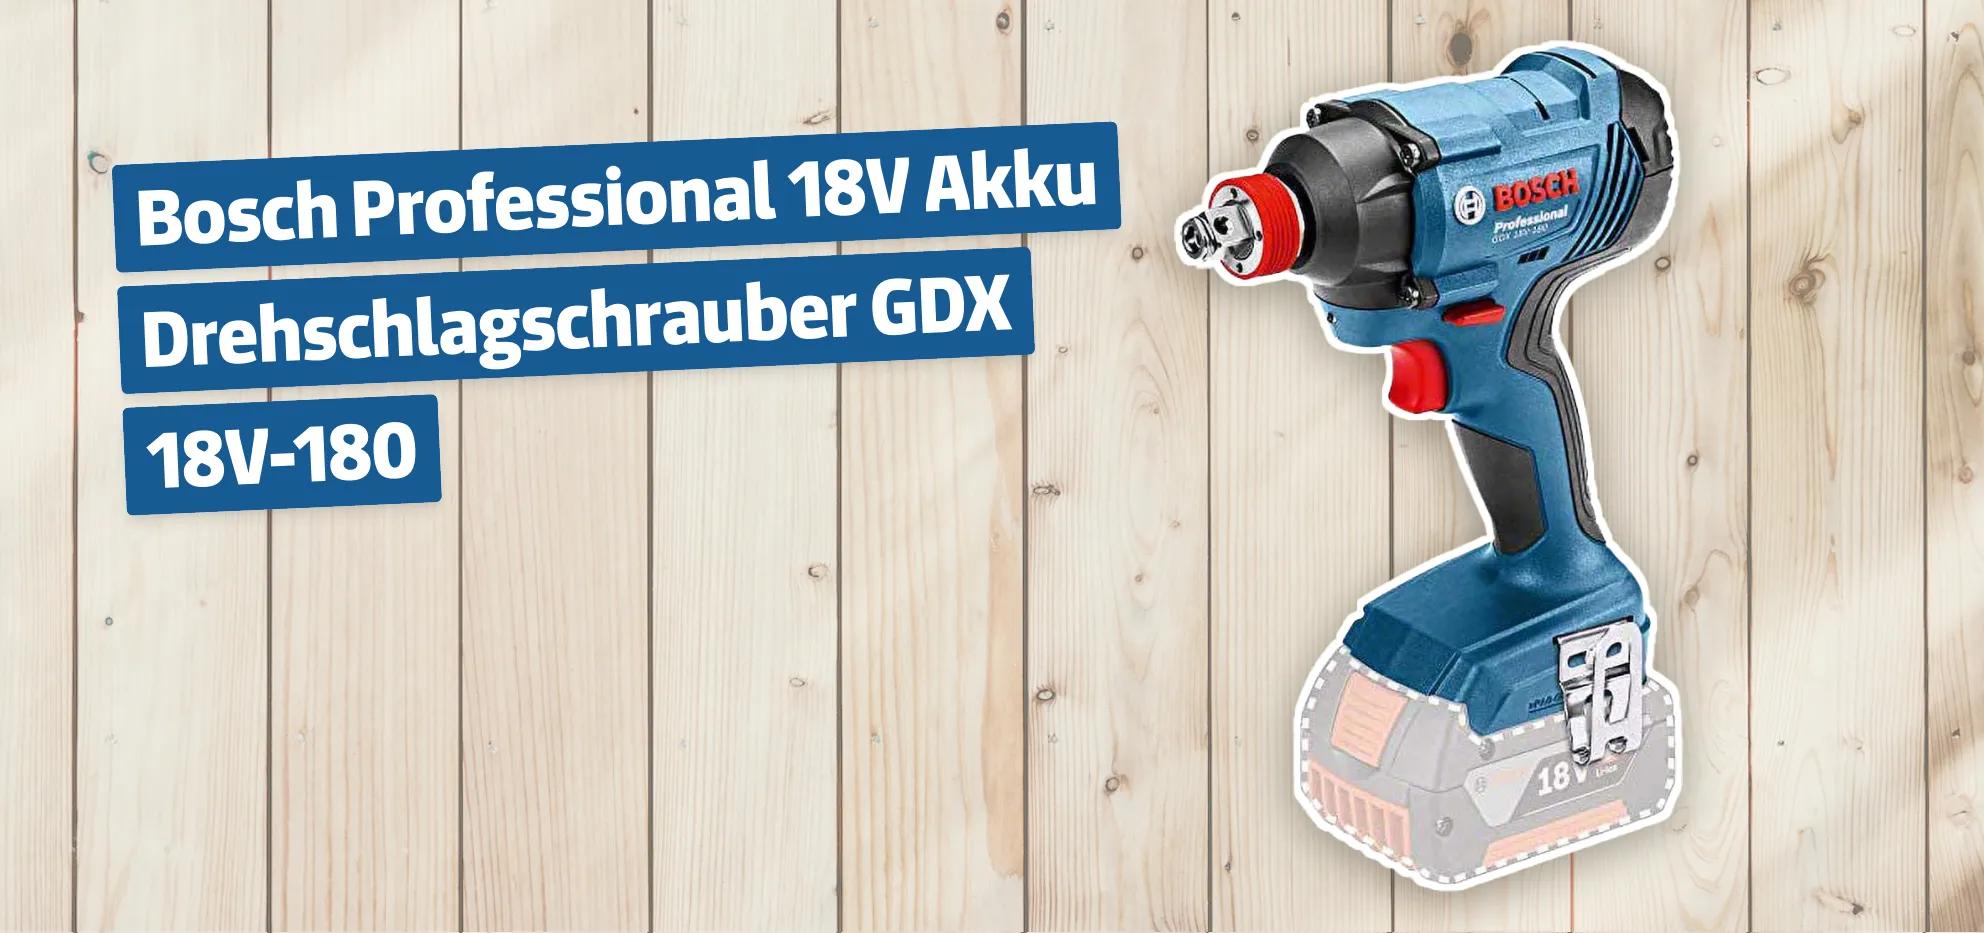 Bosch Professional 18V Akku Drehschlagschrauber GDX 18V-180